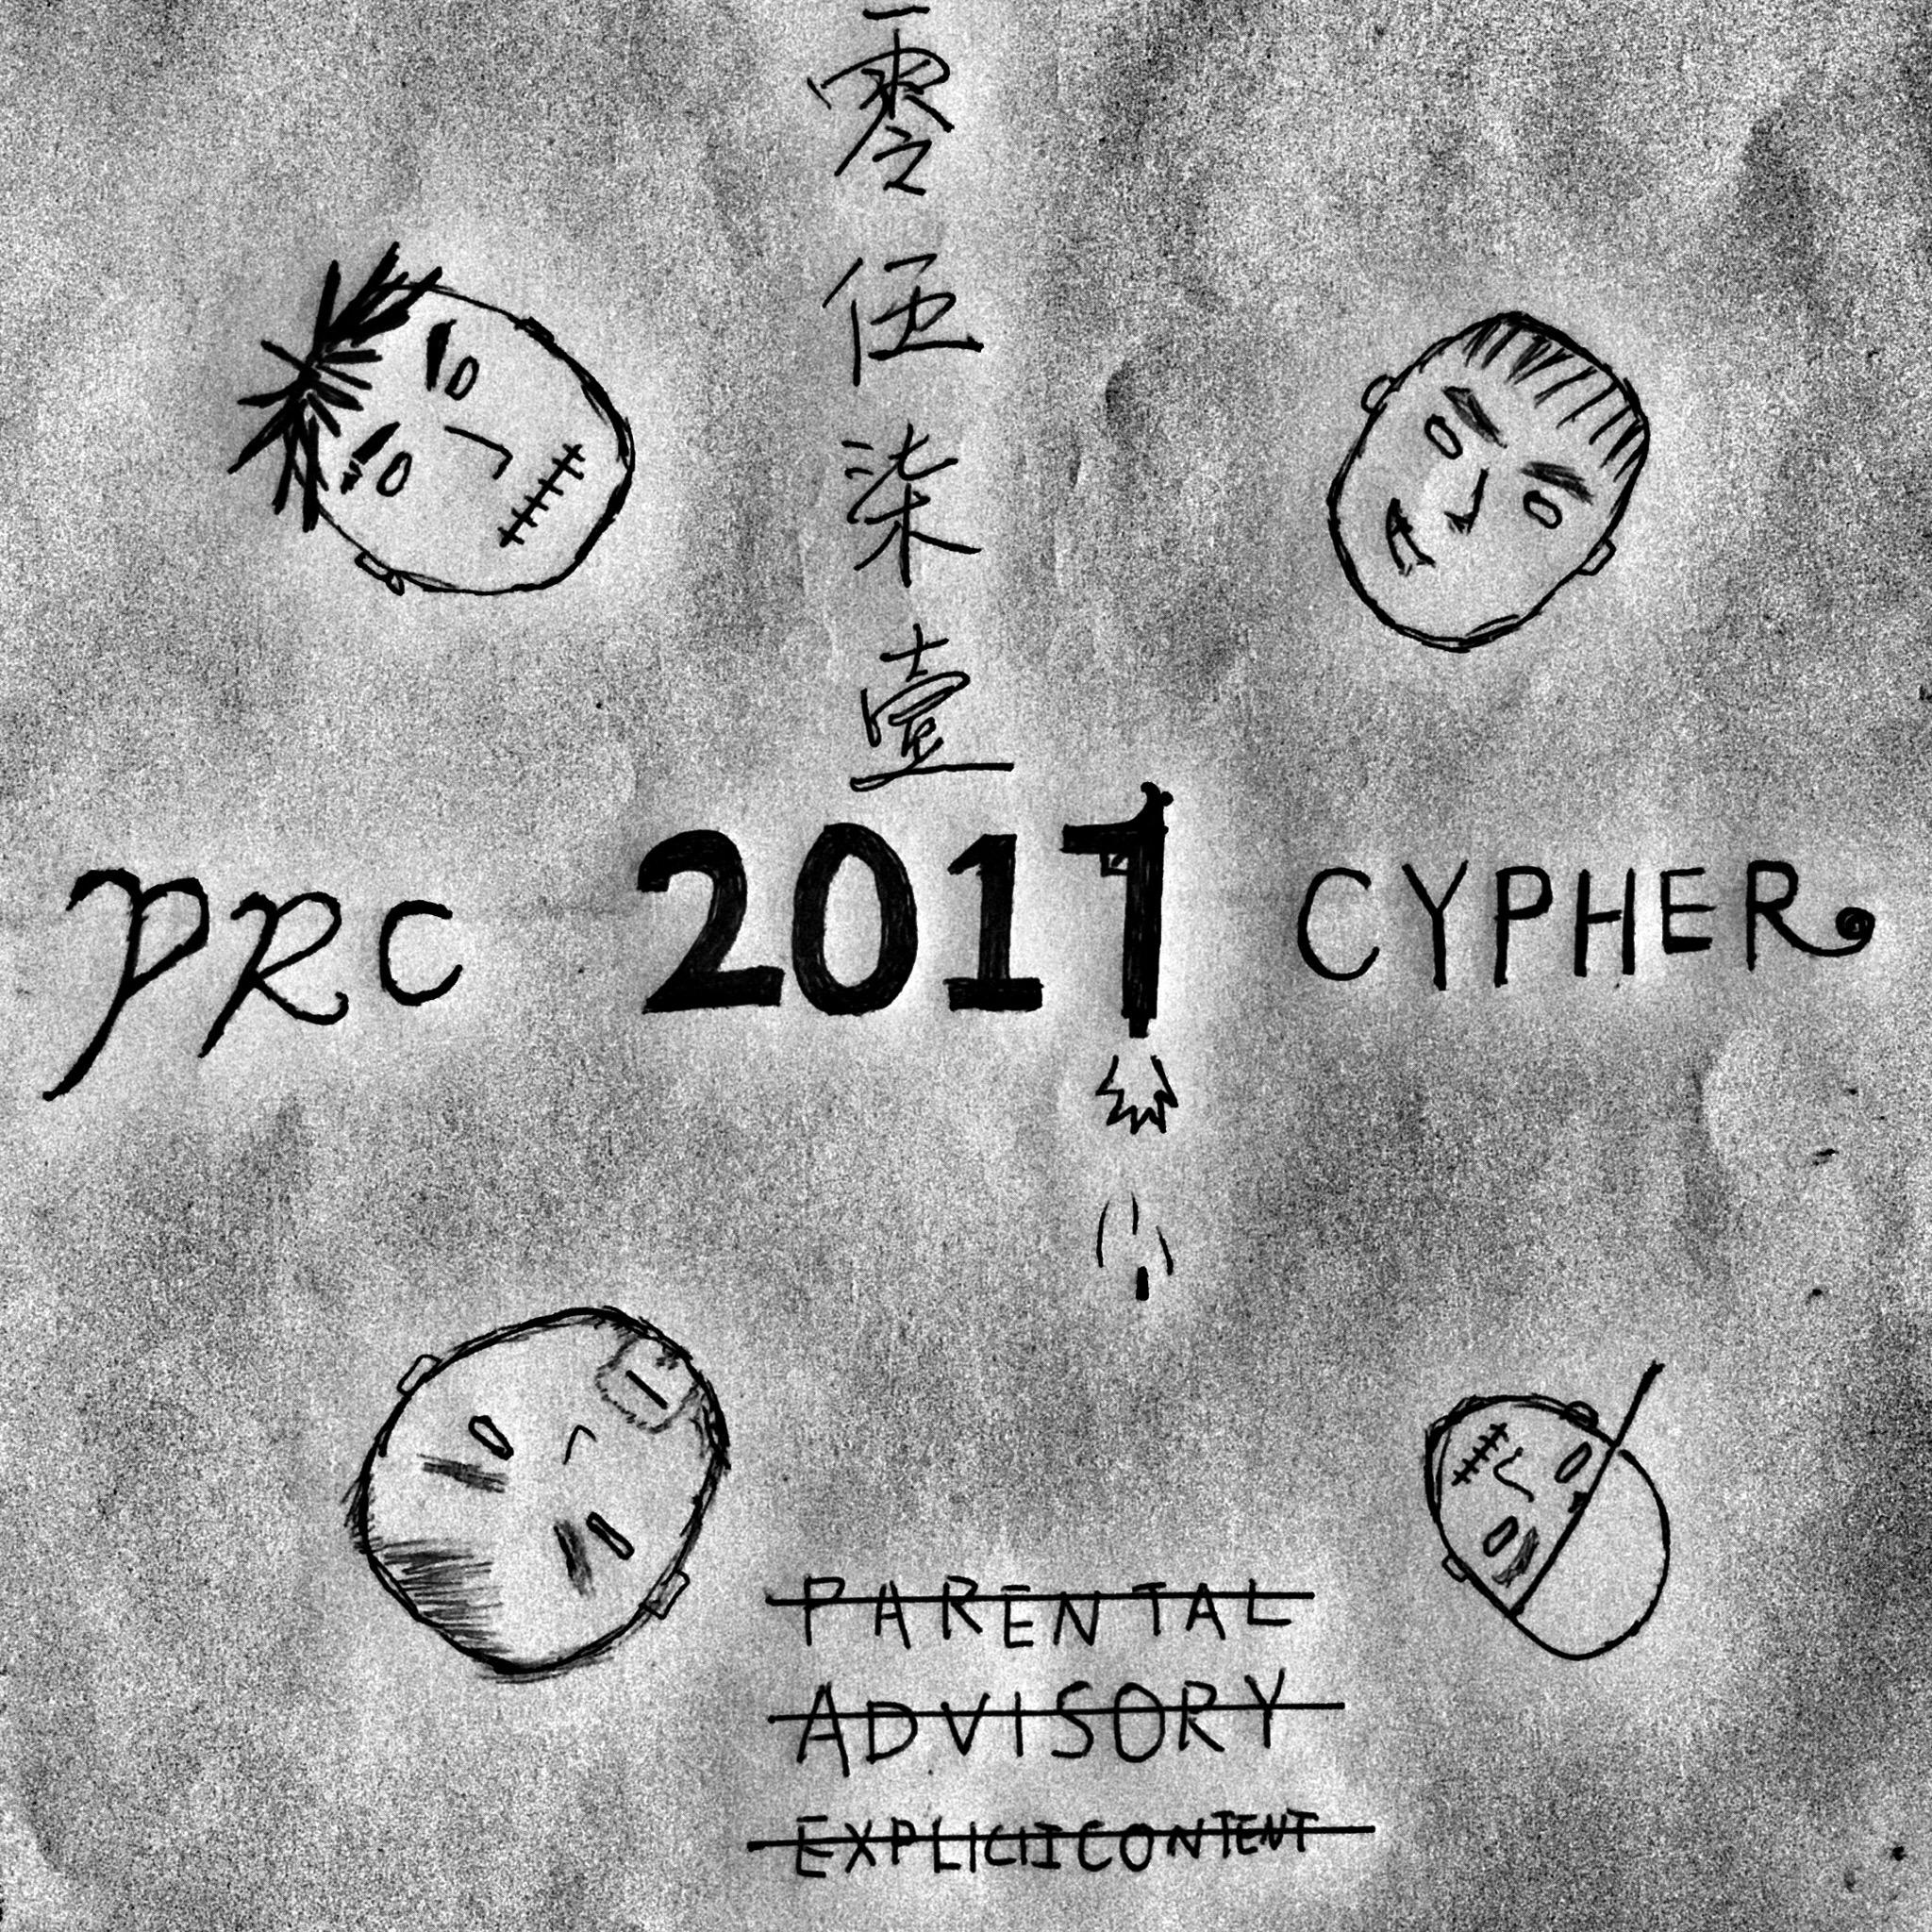 PRC  Cypher  2017